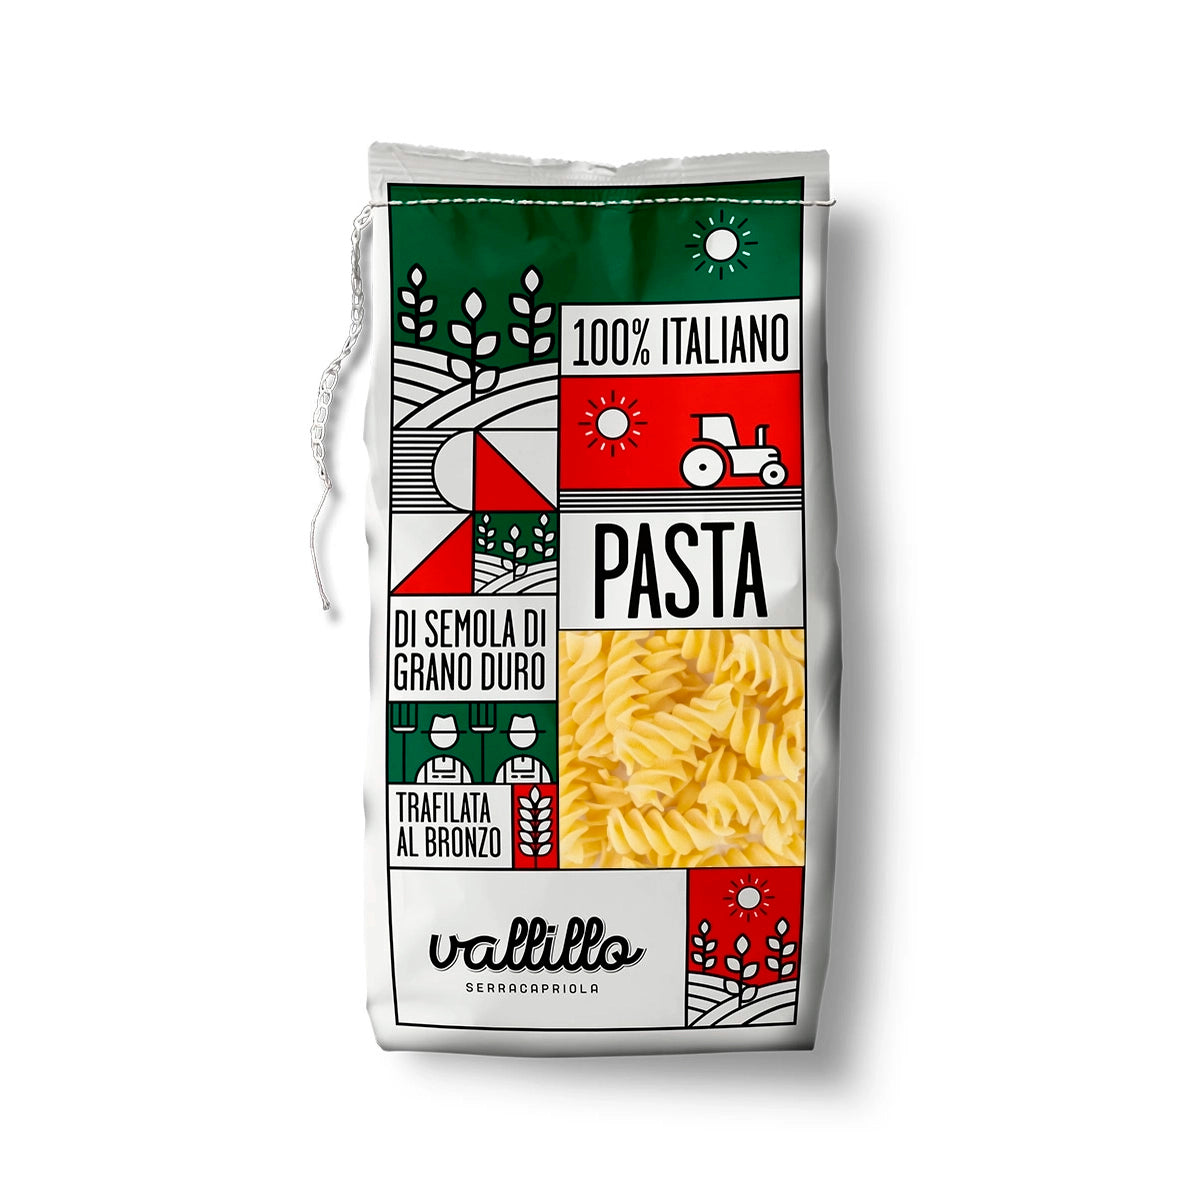 Fussilloni - pasta artesanal 100% italiana